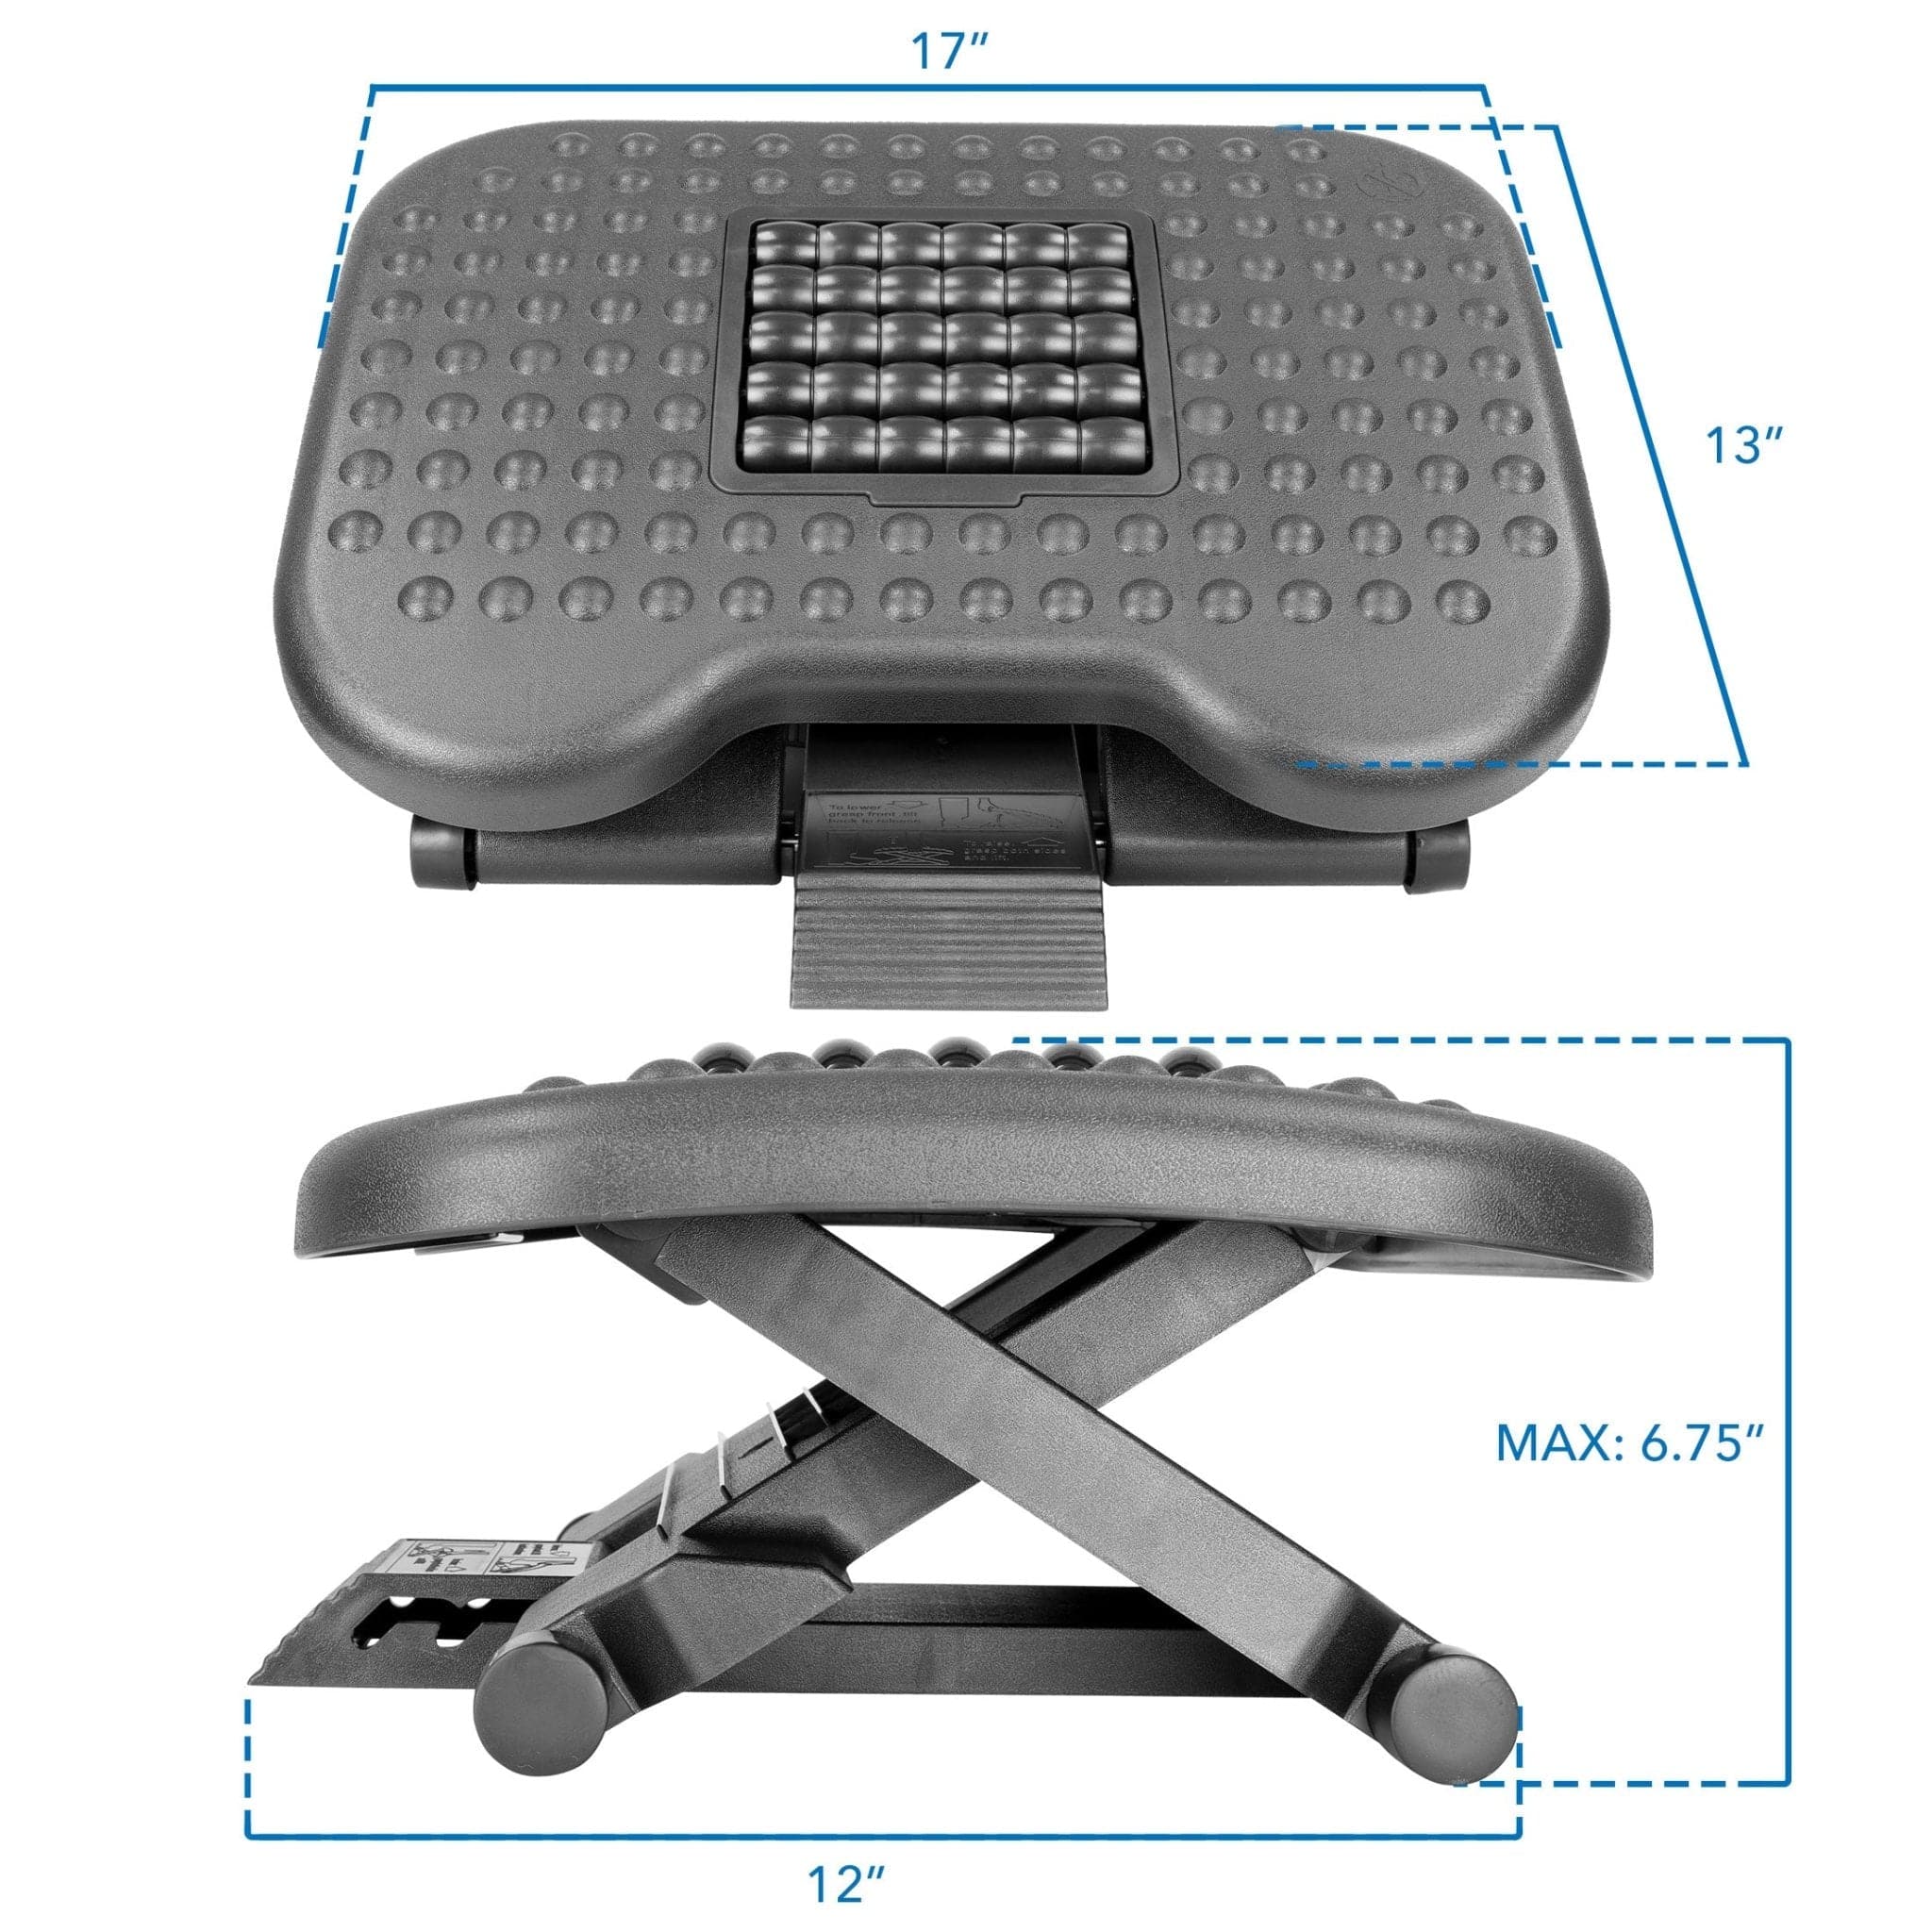 Mount-It! Under Desk Footrest, Adjustable Height/Angle and Massaging Rollers, Black